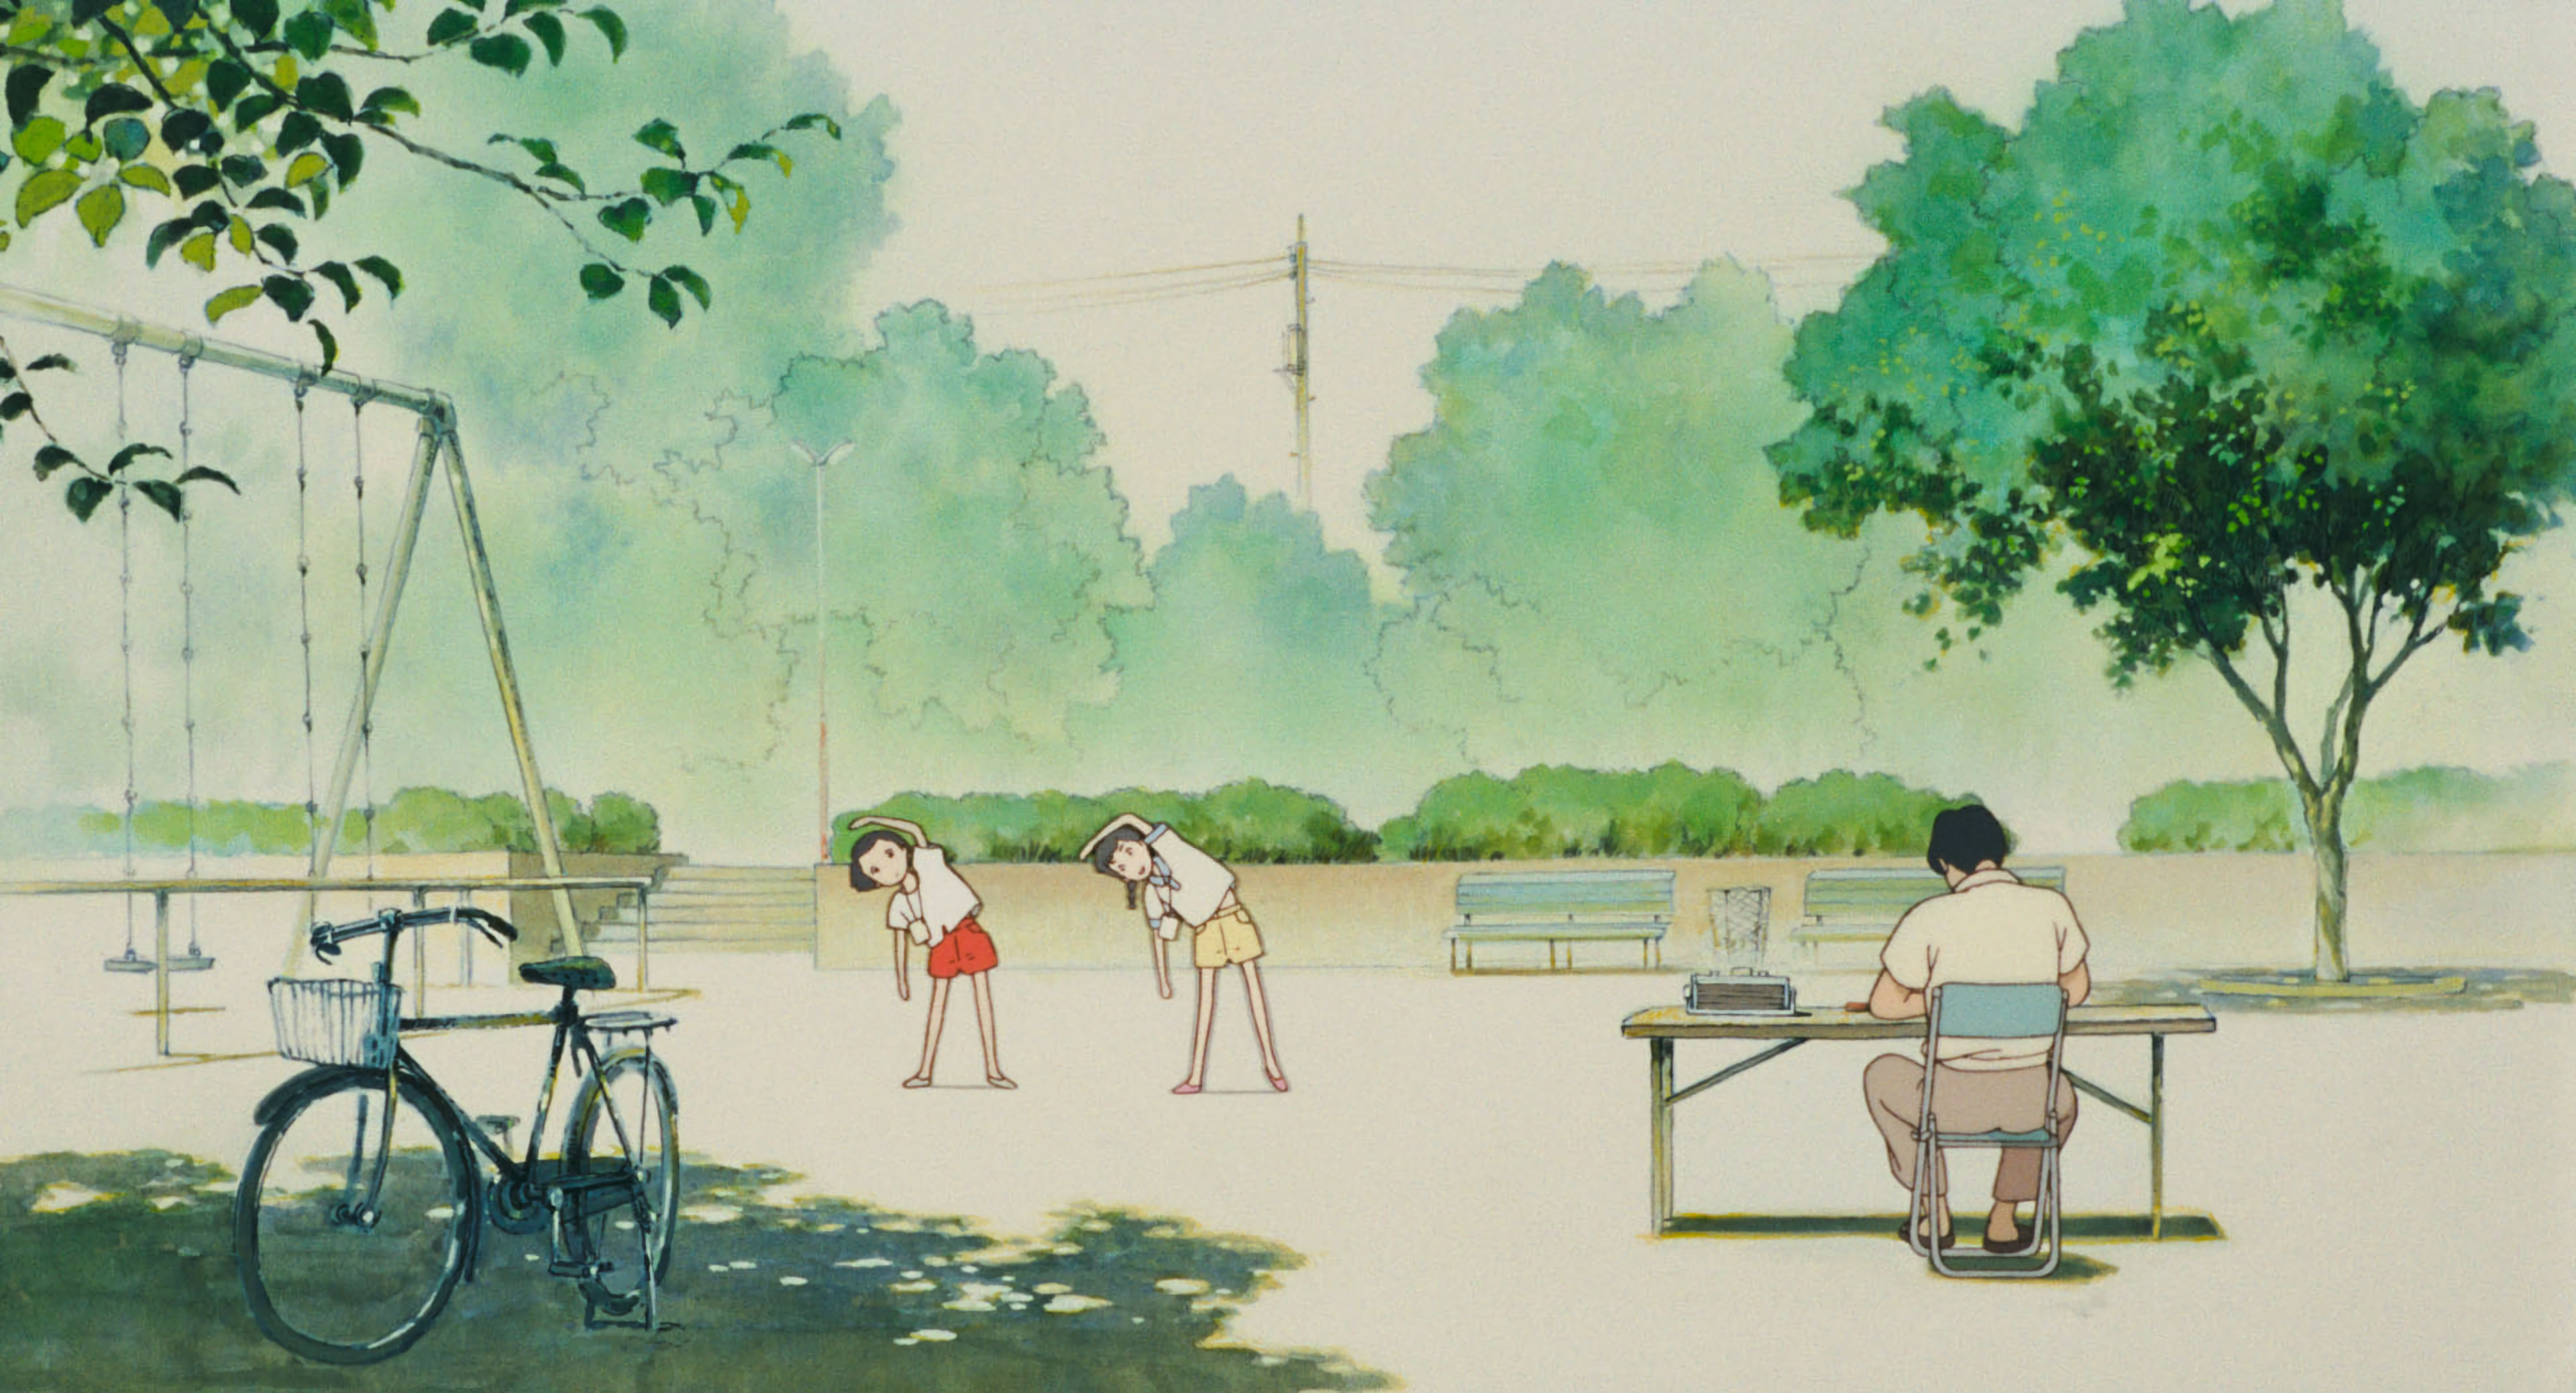 Anime 3840x2076 Studio Ghibli Omoide Poro Poro upscaled film stills anime girls anime men Anime screenshot bicycle stretching